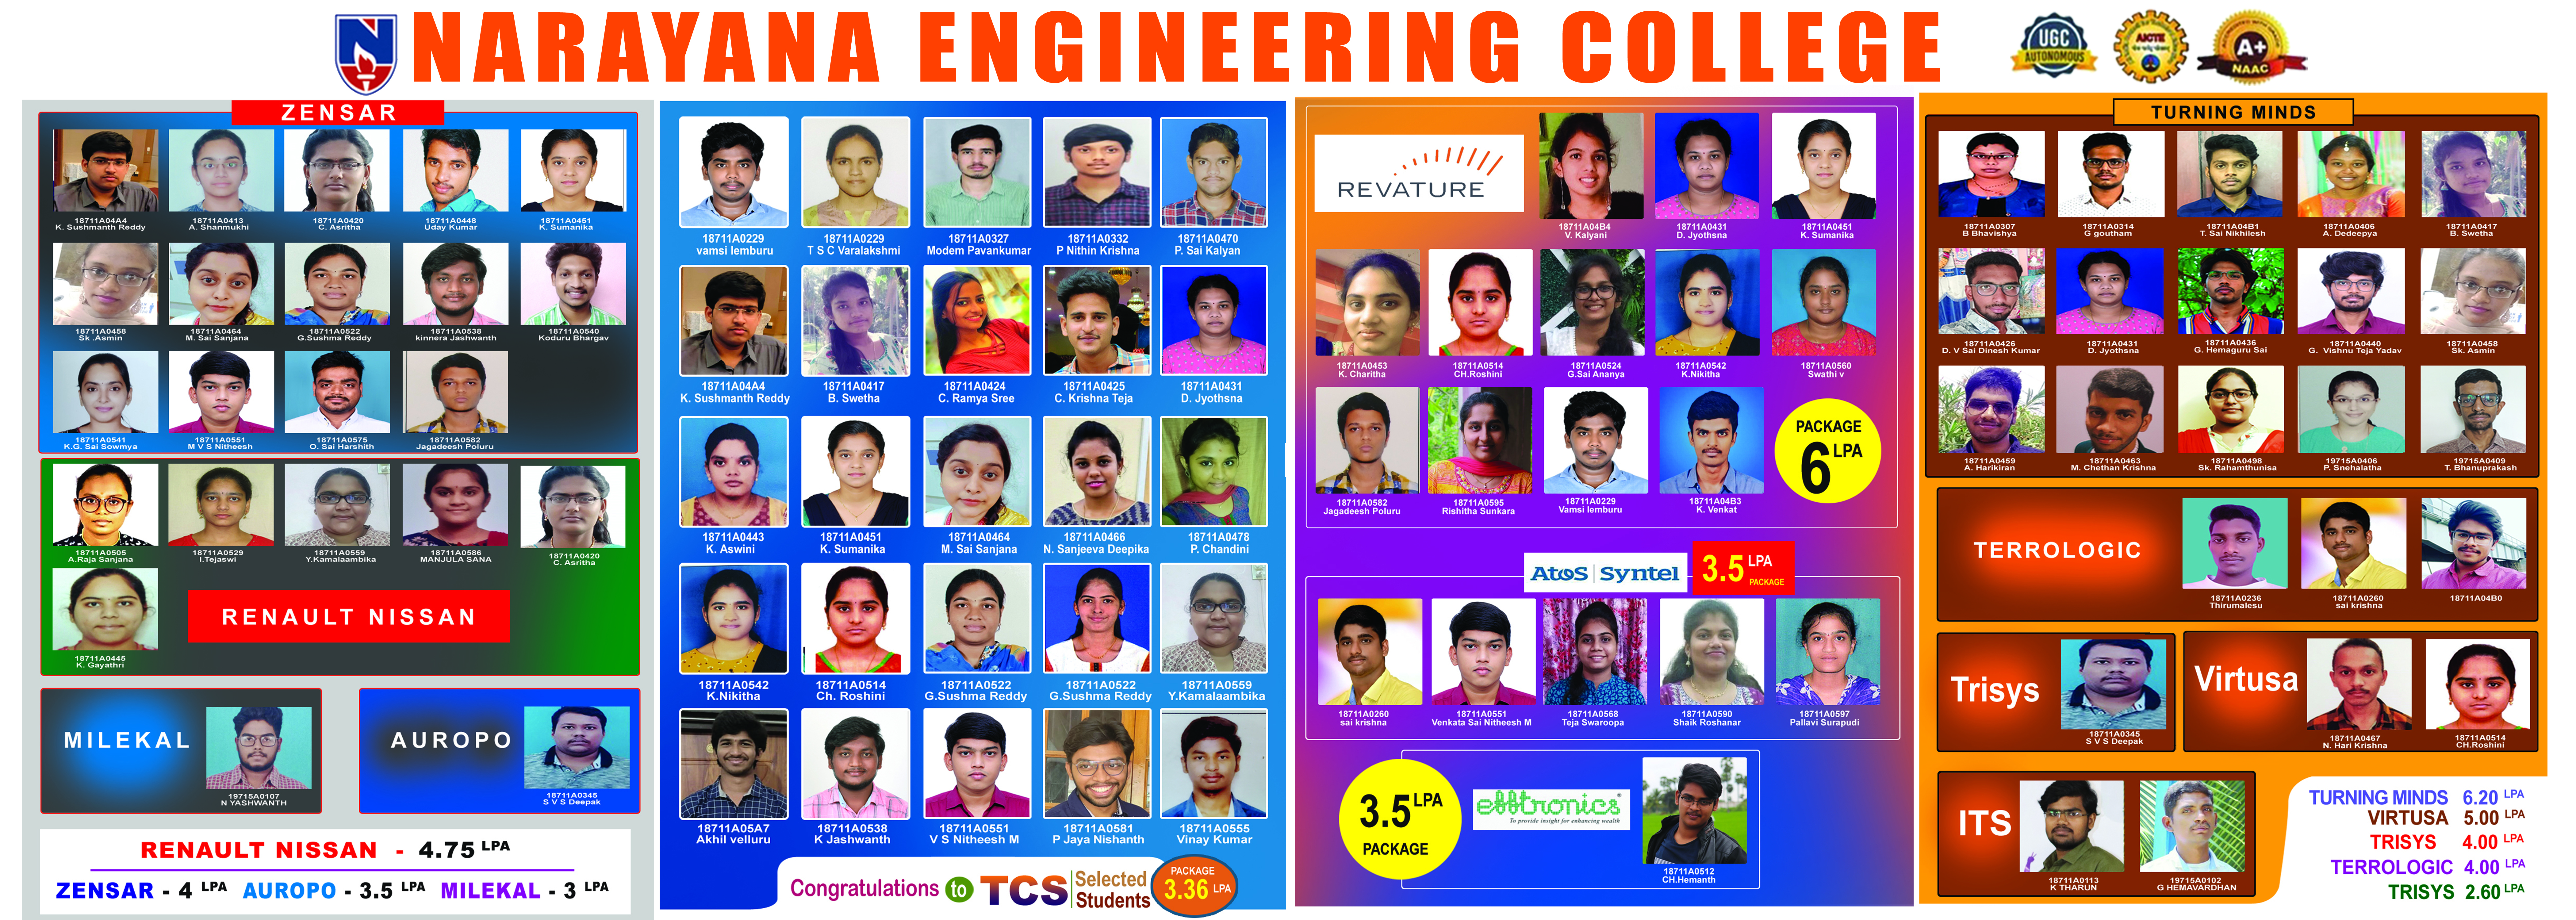 Narayana Engineering College Campus